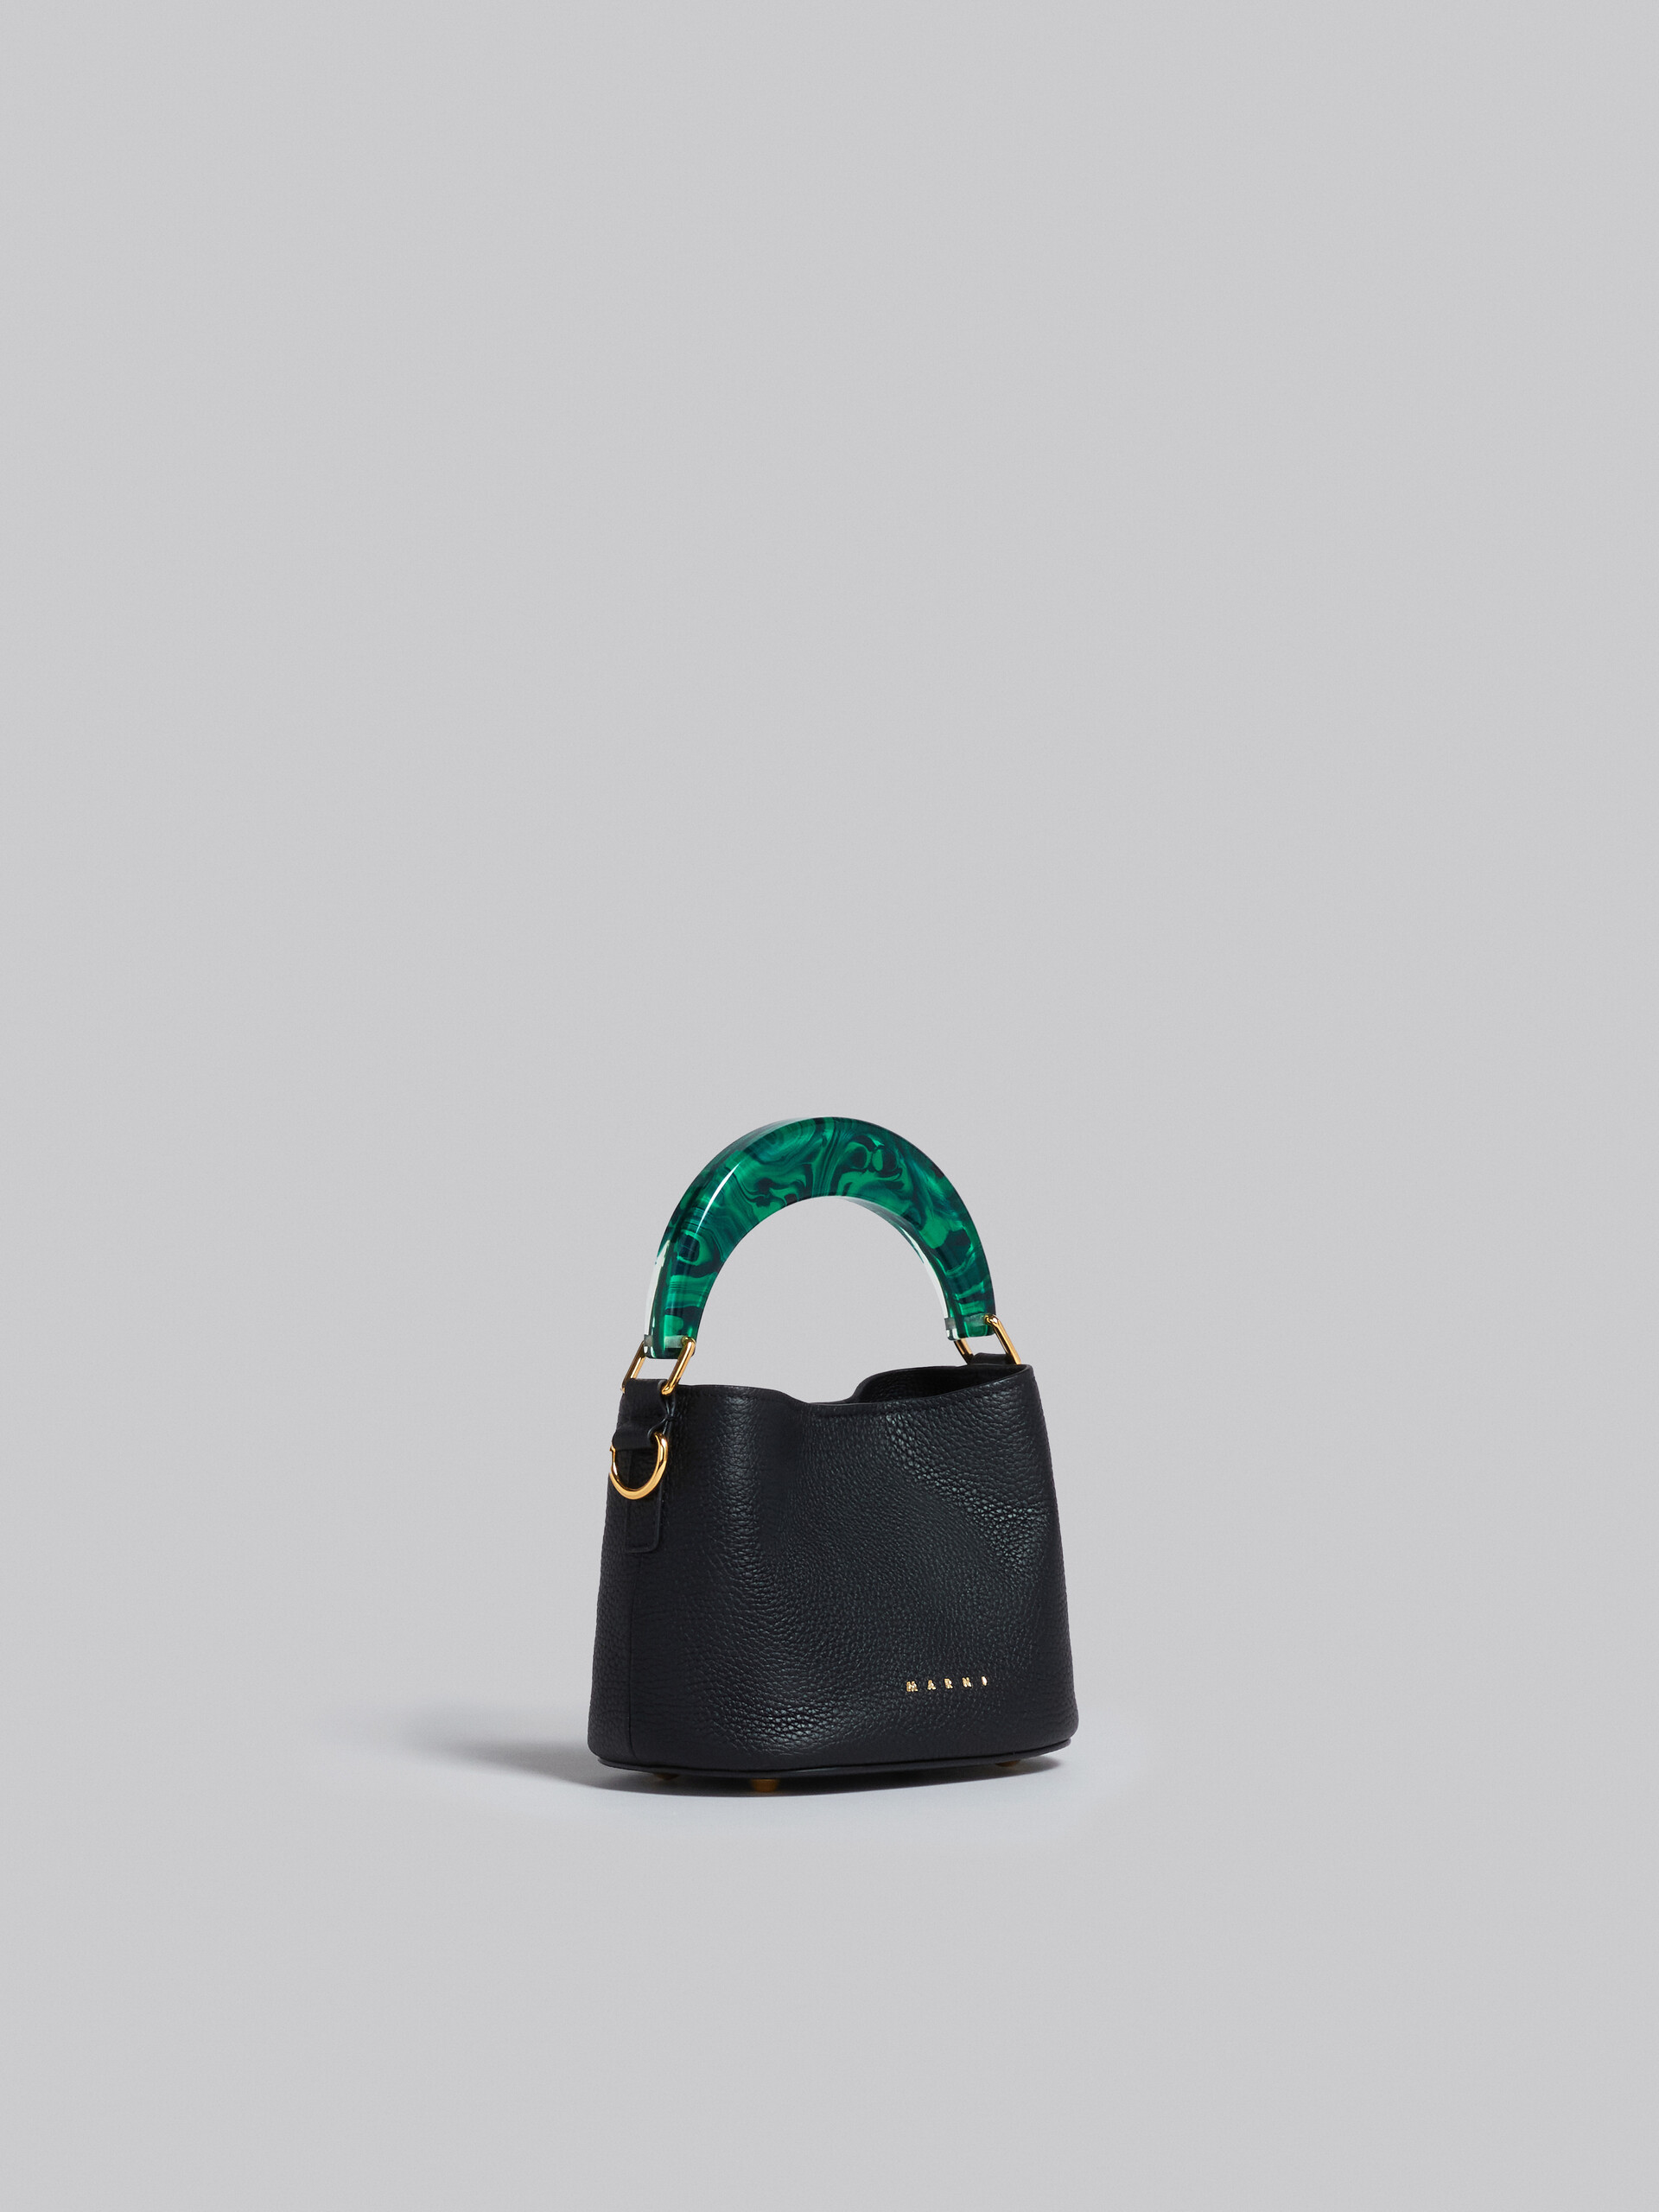 Venice Mini Bucket Bag in black leather - Shoulder Bags - Image 5